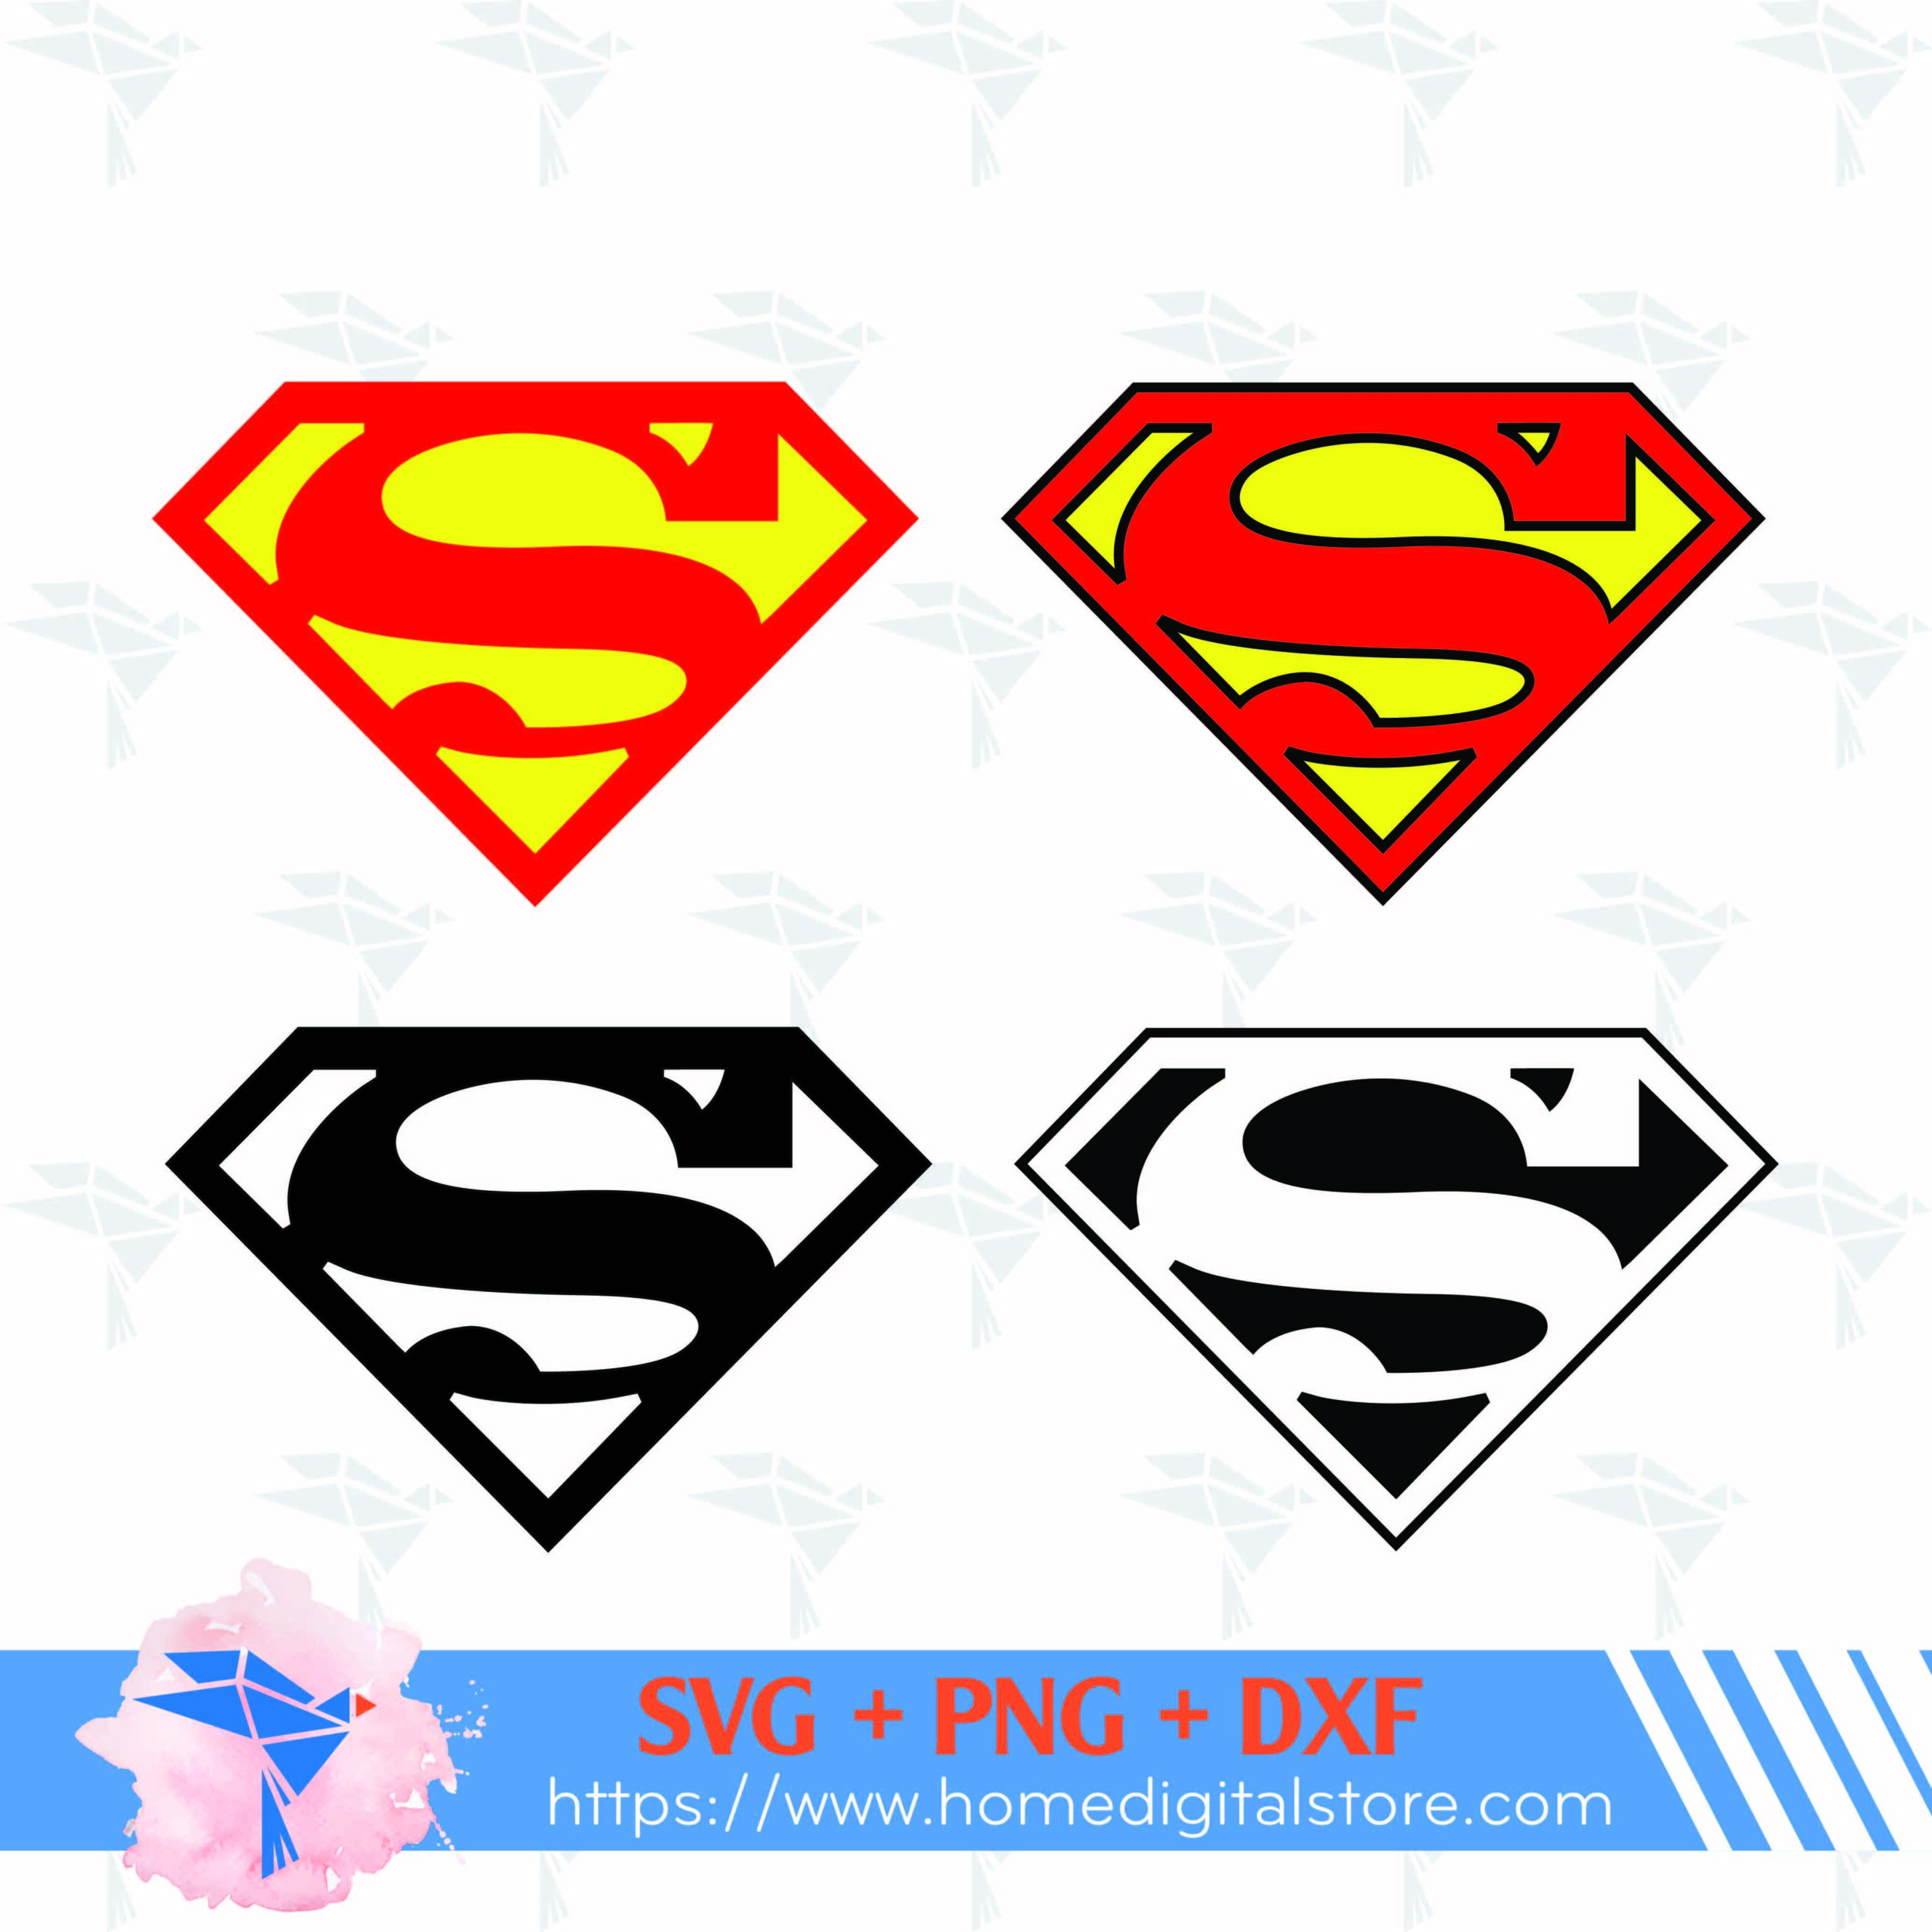 superman logo designs